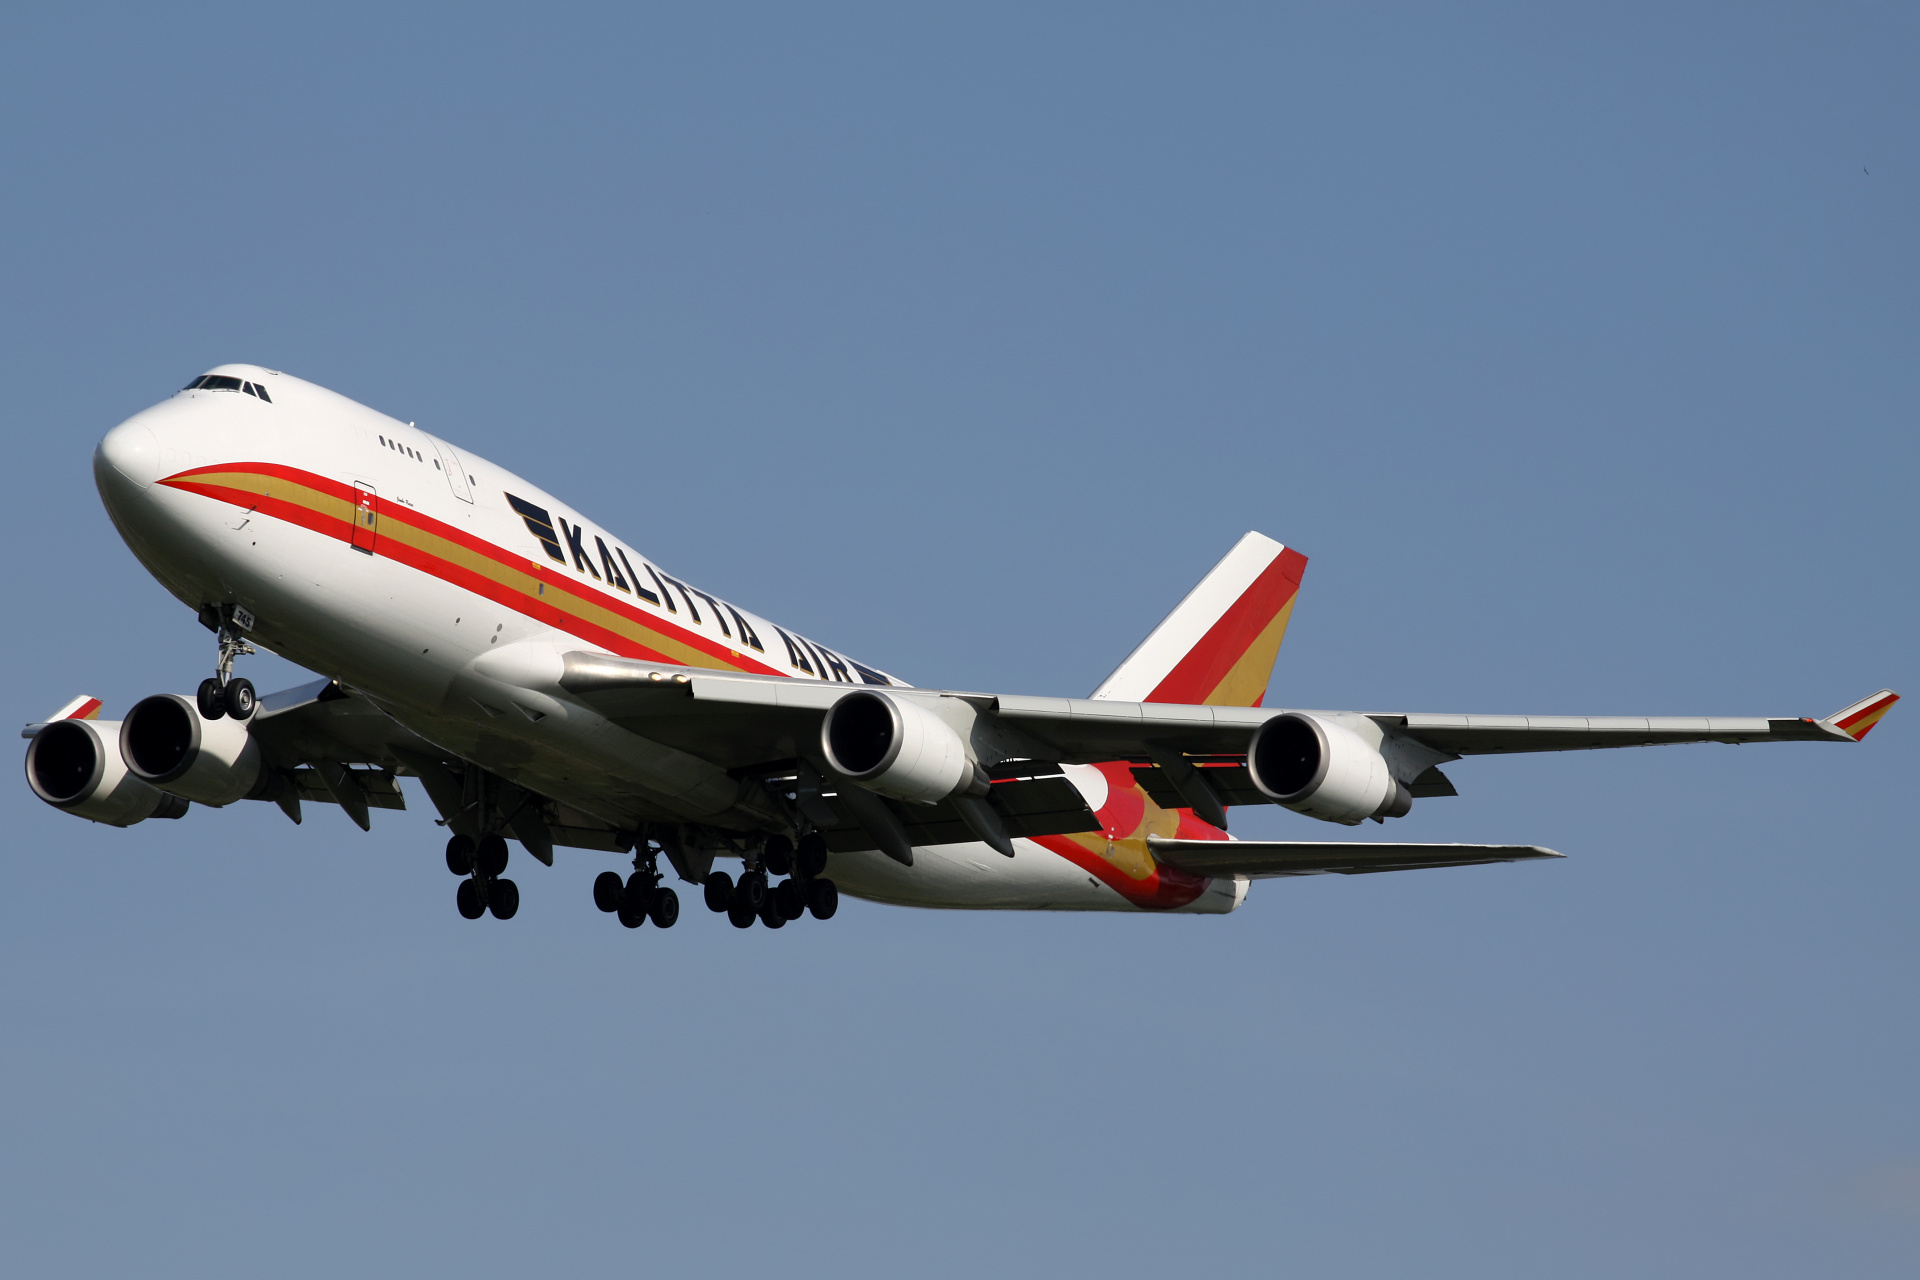 BCF, N745CK (Aircraft » EPWA Spotting » Boeing 747-400F » Kalitta Air)